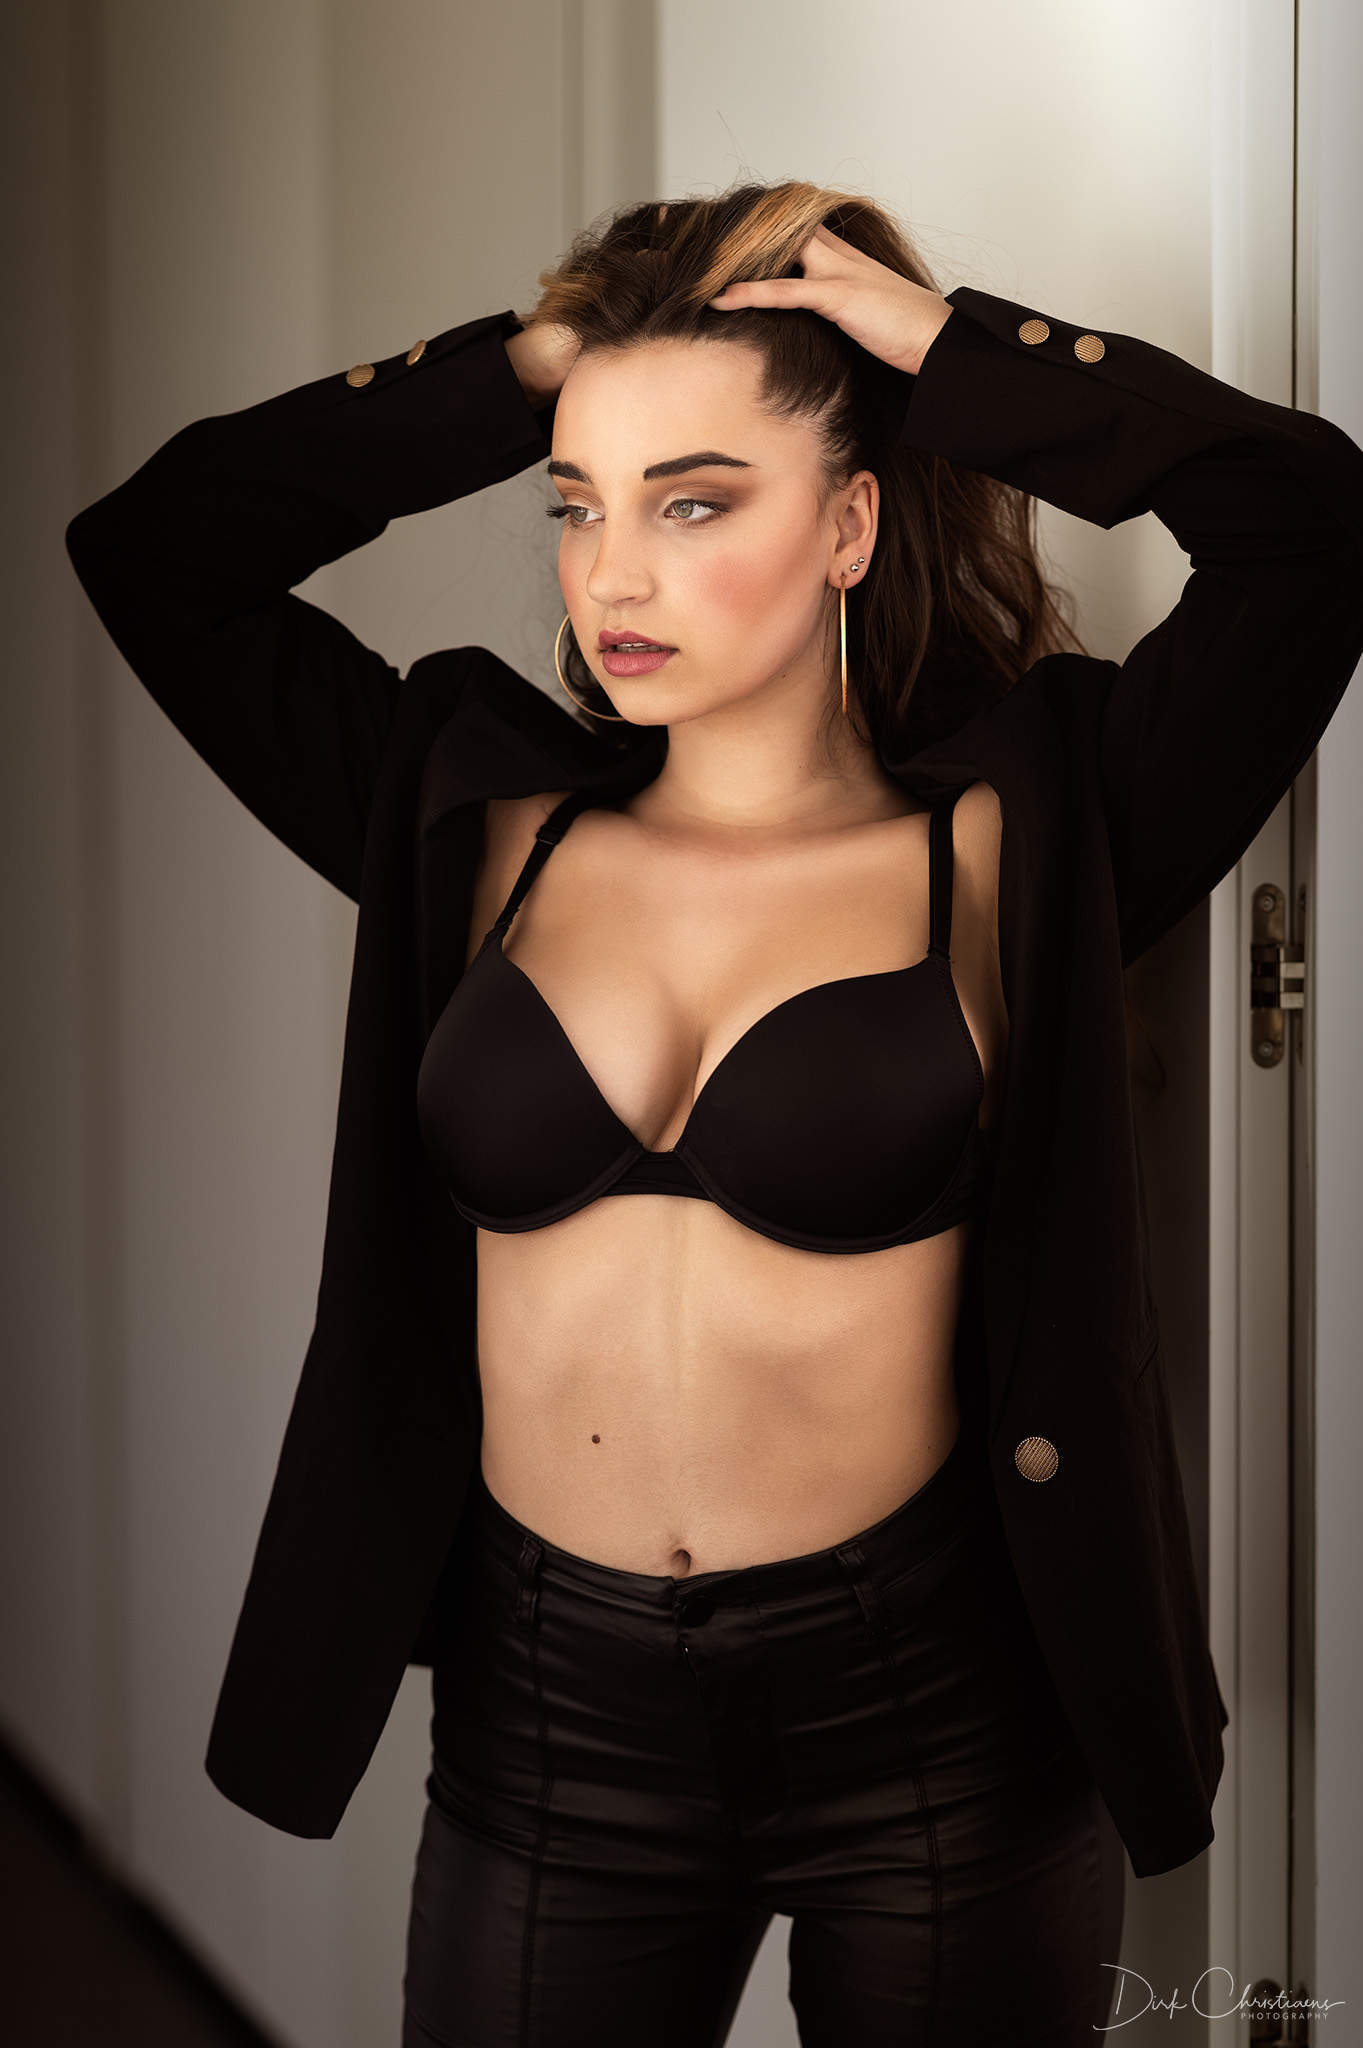 Céline Fairon, model from Belgium at a boudoir photoshoot